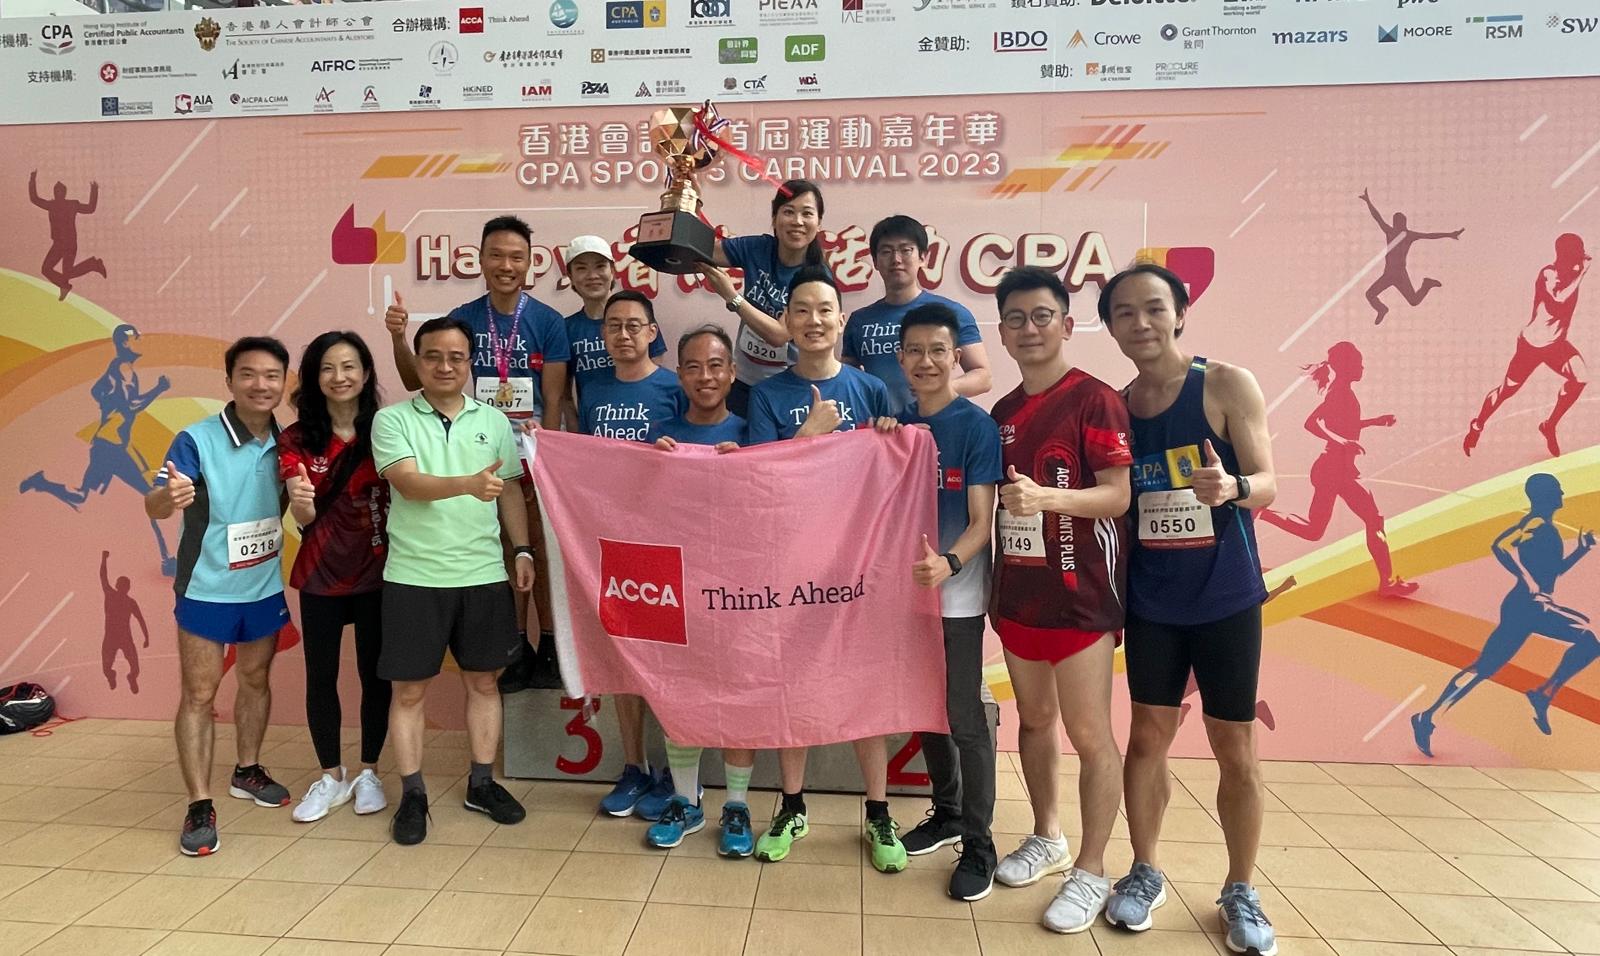 ACCA香港分會獲得團體賽季軍。